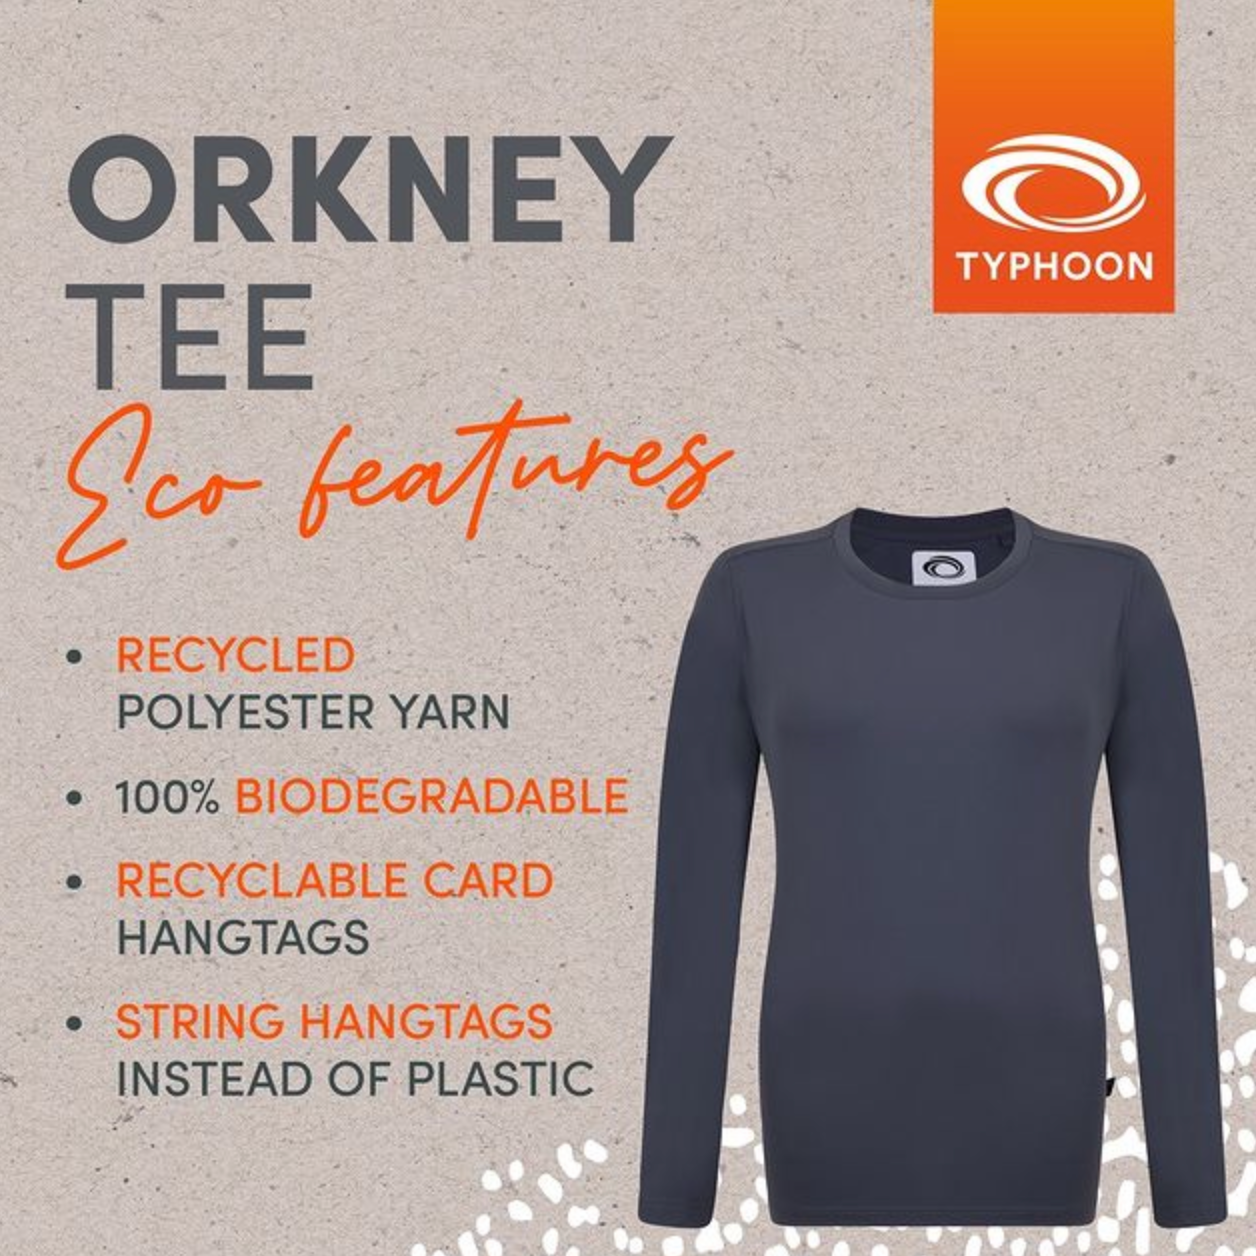 Typhoon Orkney Short Sleeve Tech Tee - Womens